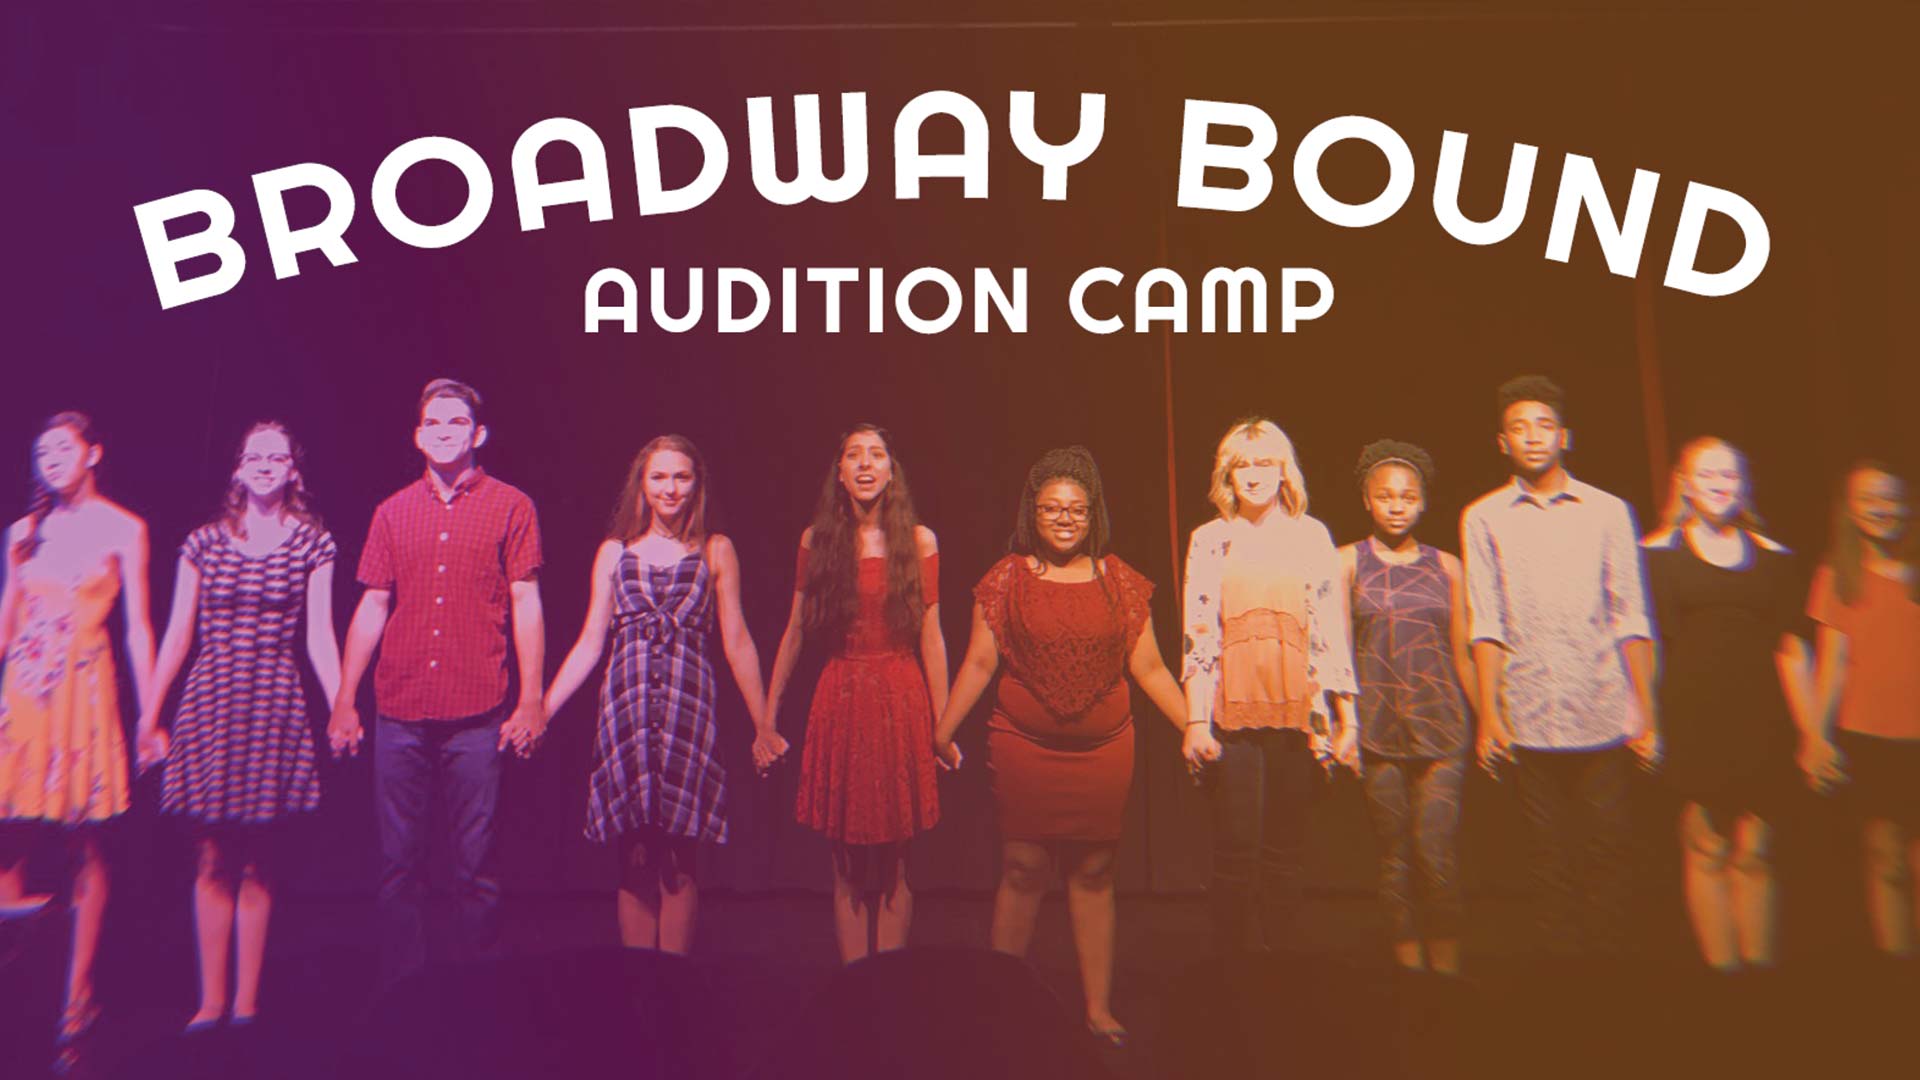 Broadway Bound Audition Camp